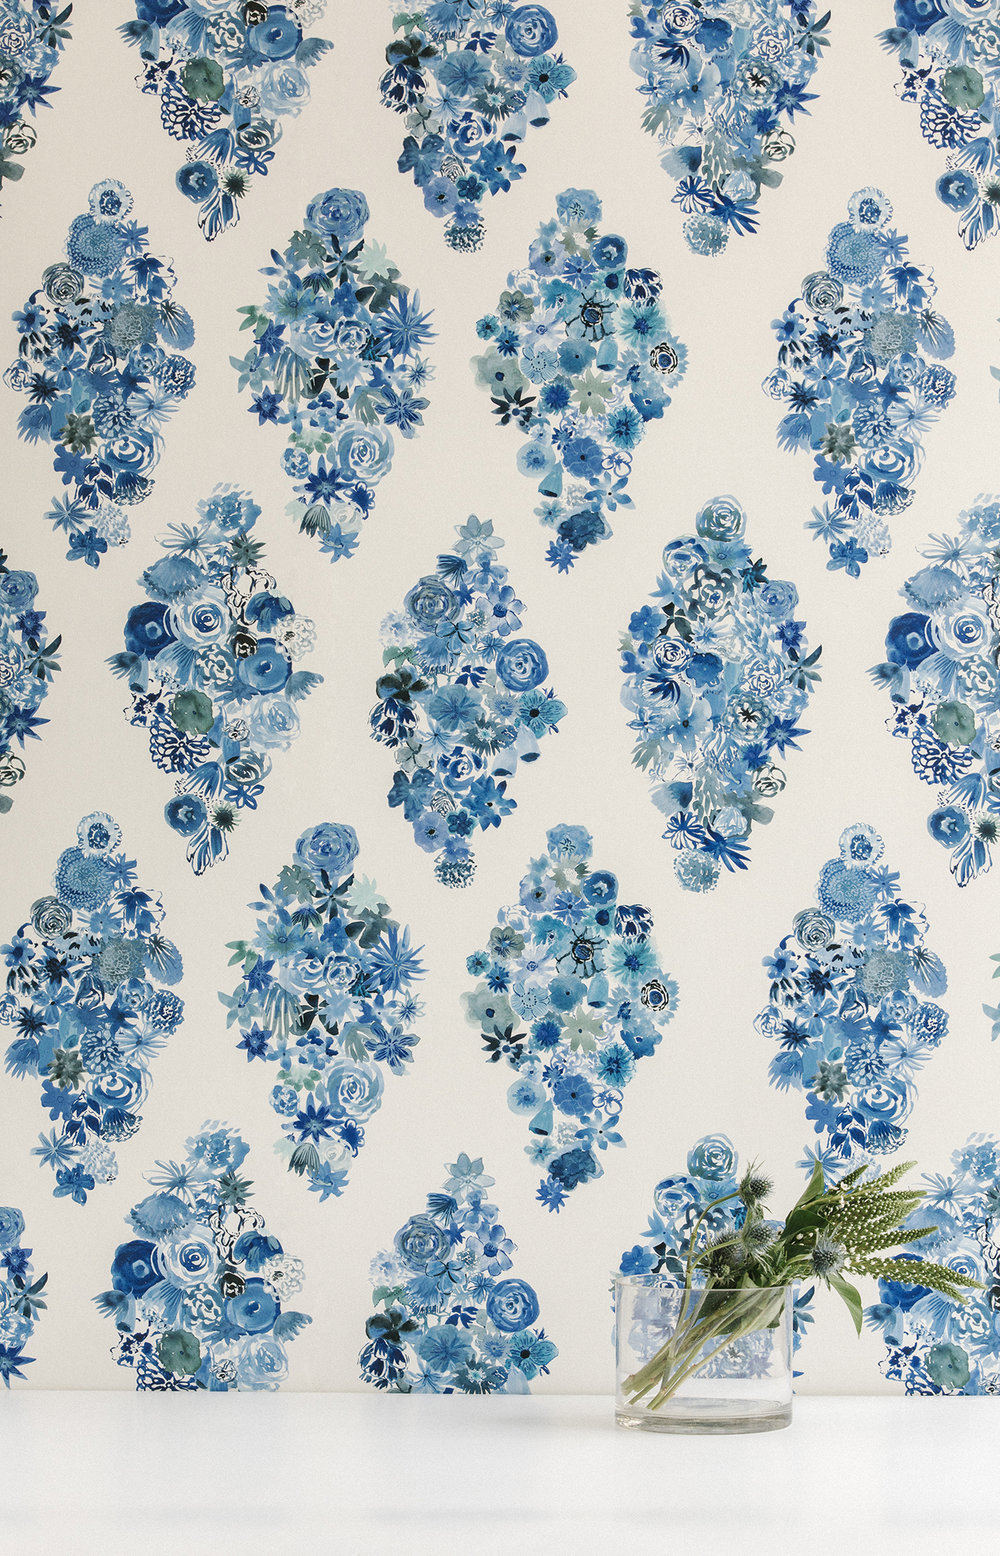 Teal Floral Wallpaper - HD Wallpaper 